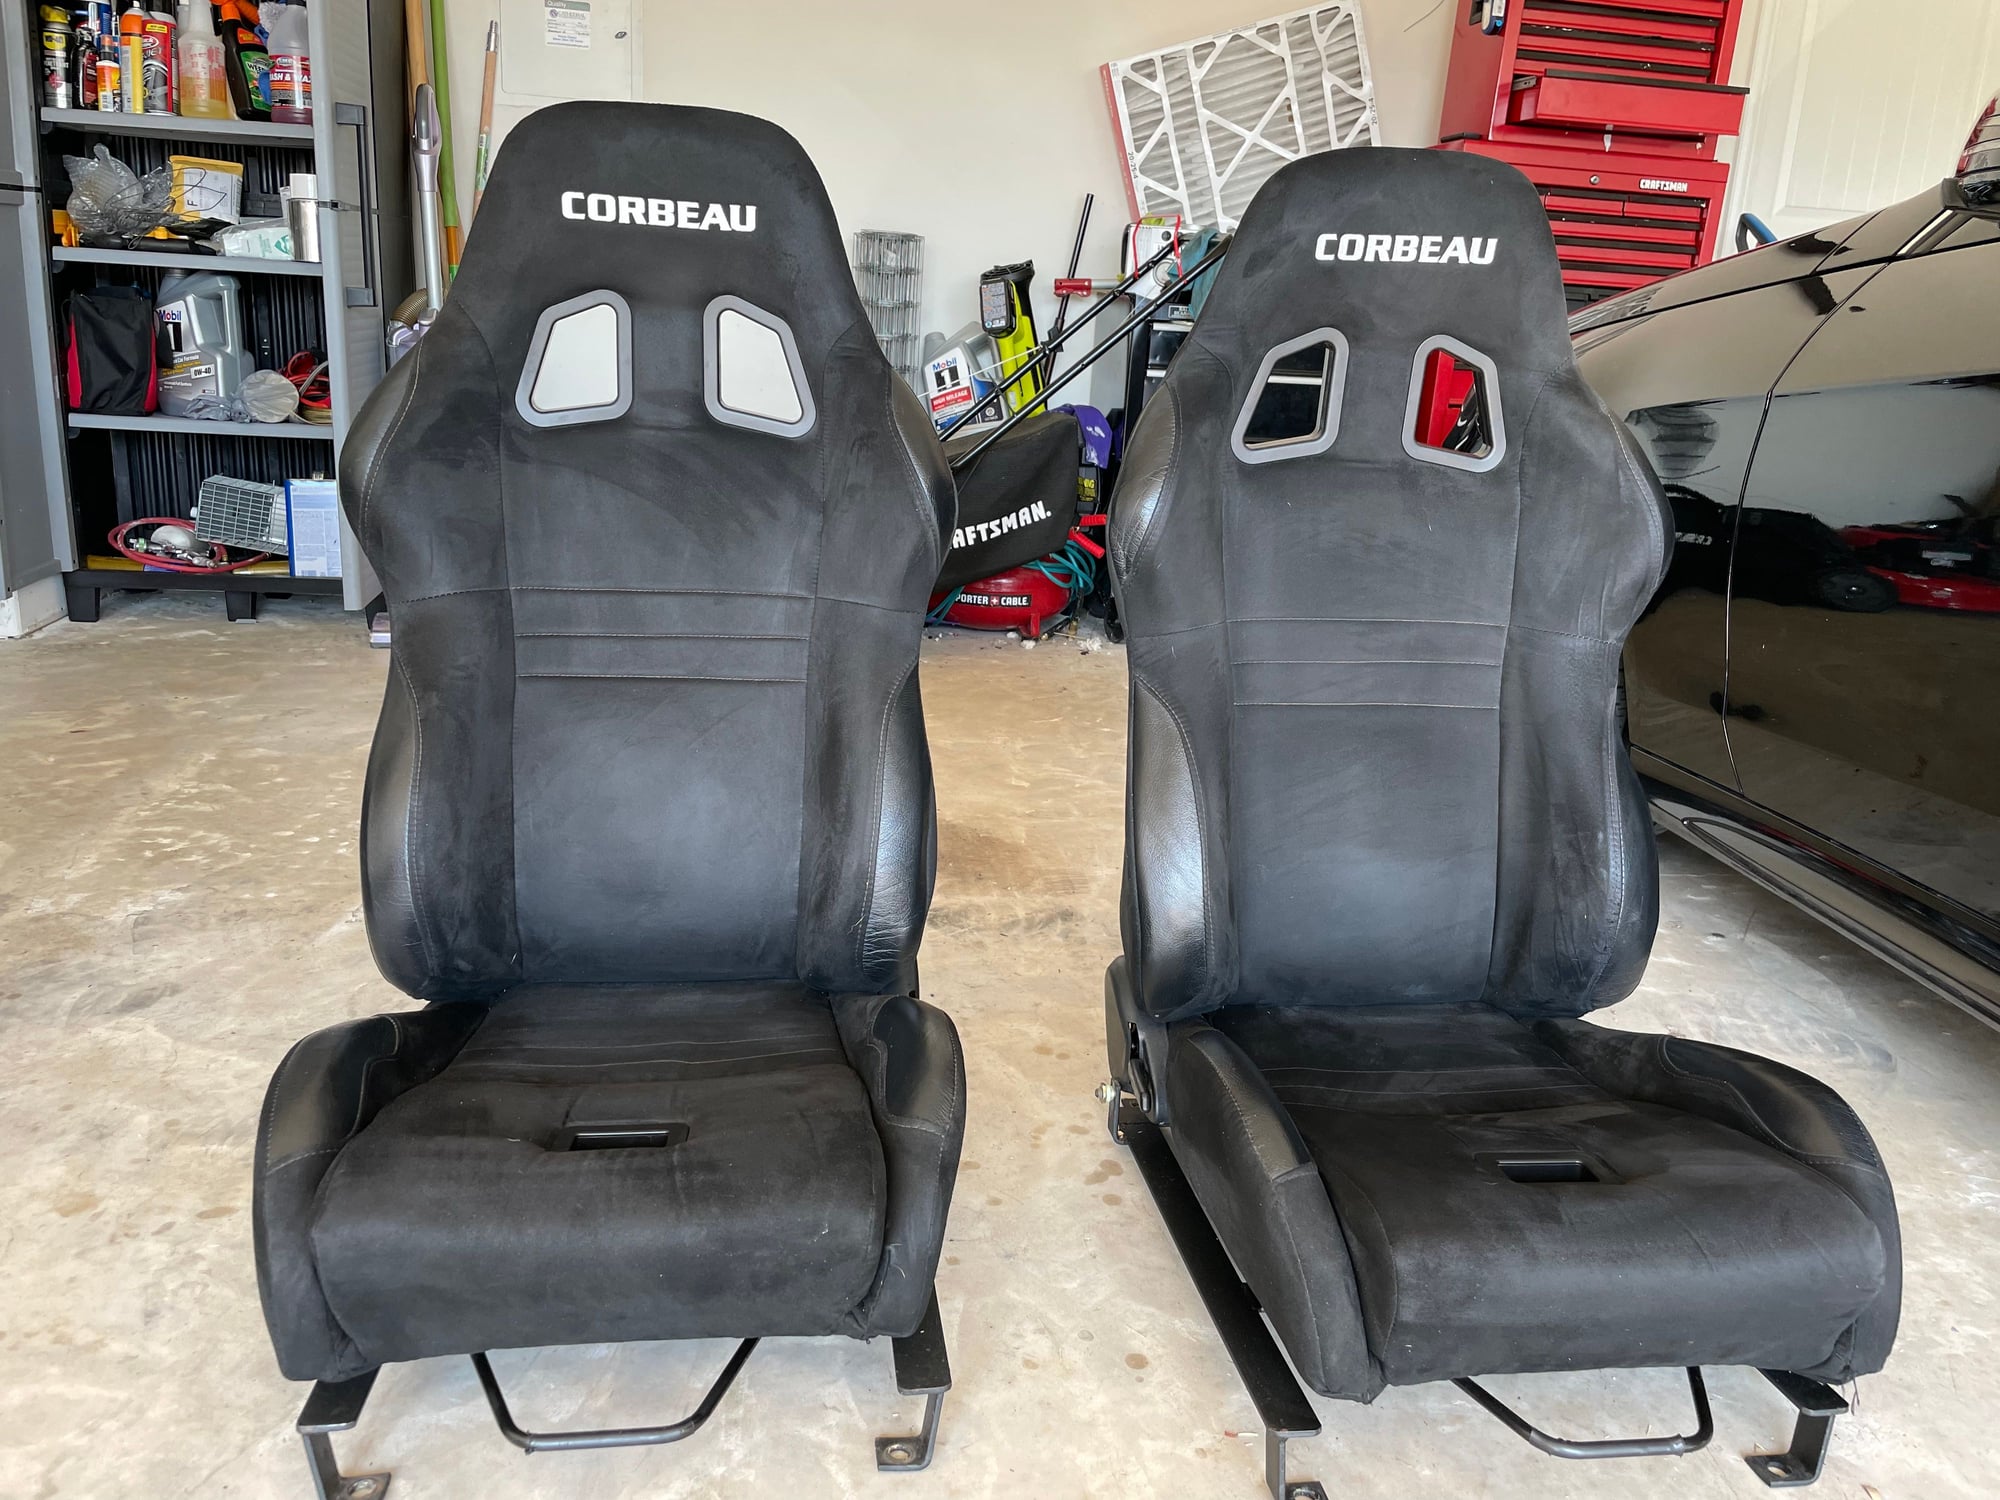 Accessories - Corbeau Seats w/ C5 Corvette Rails Reclining & Sliding - Used - 0  All Models - Dallas, TX 75252, United States